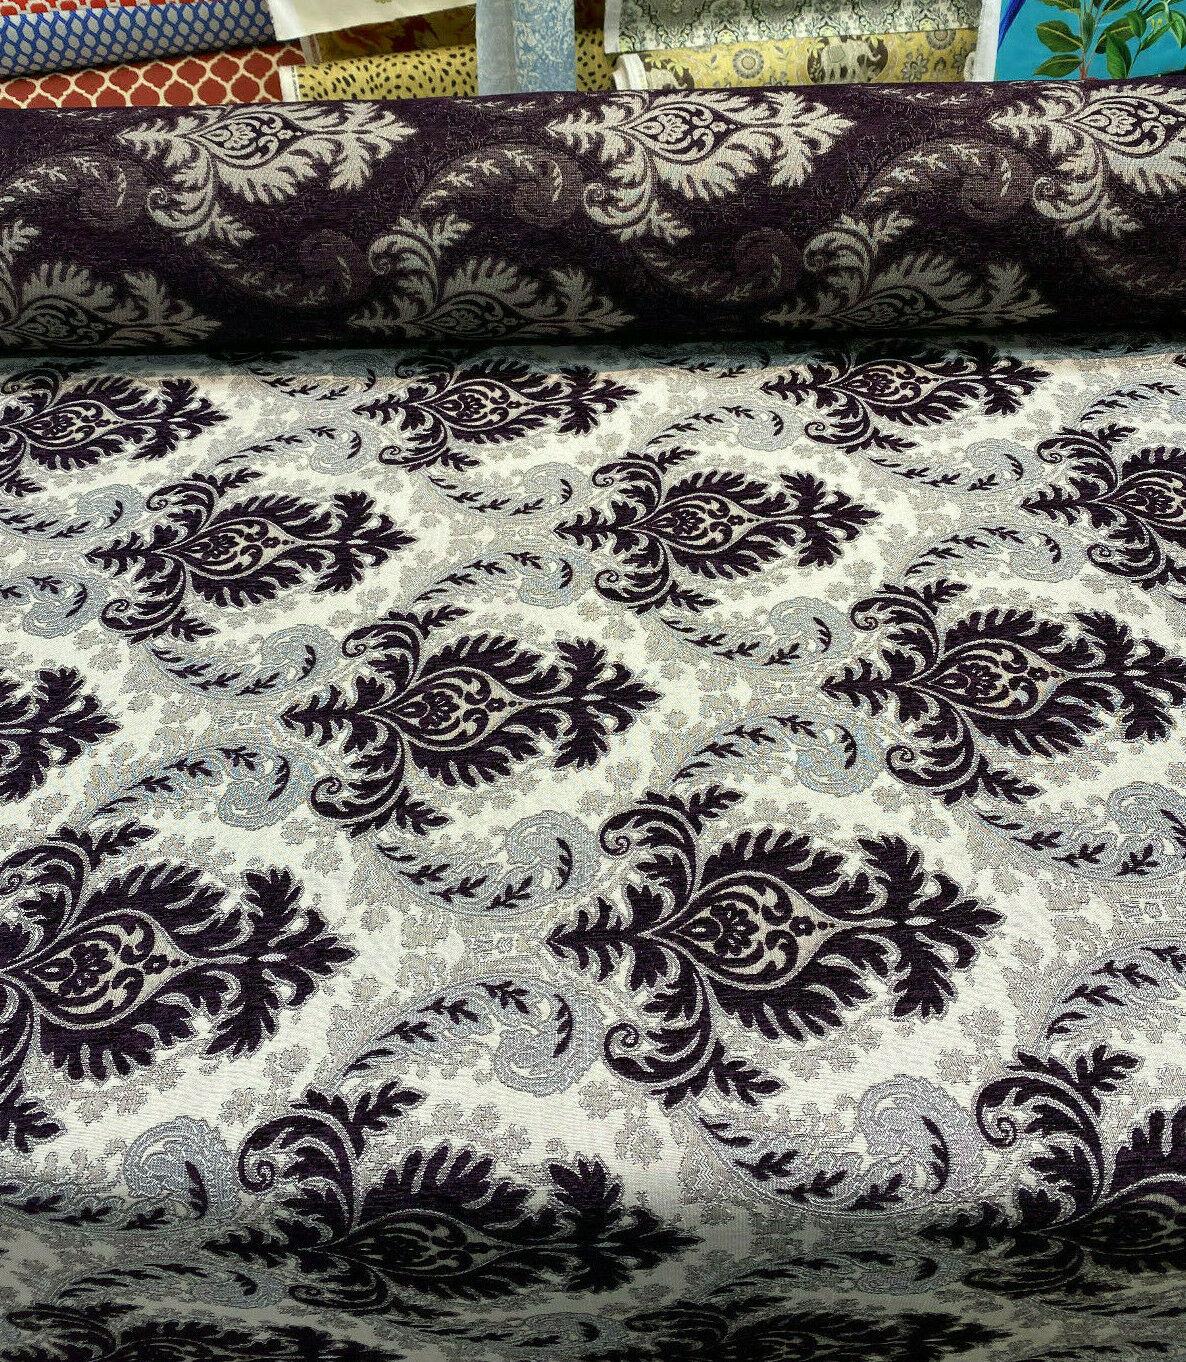 HHF Provincial Purple - Linen Like Upholstery Fabric